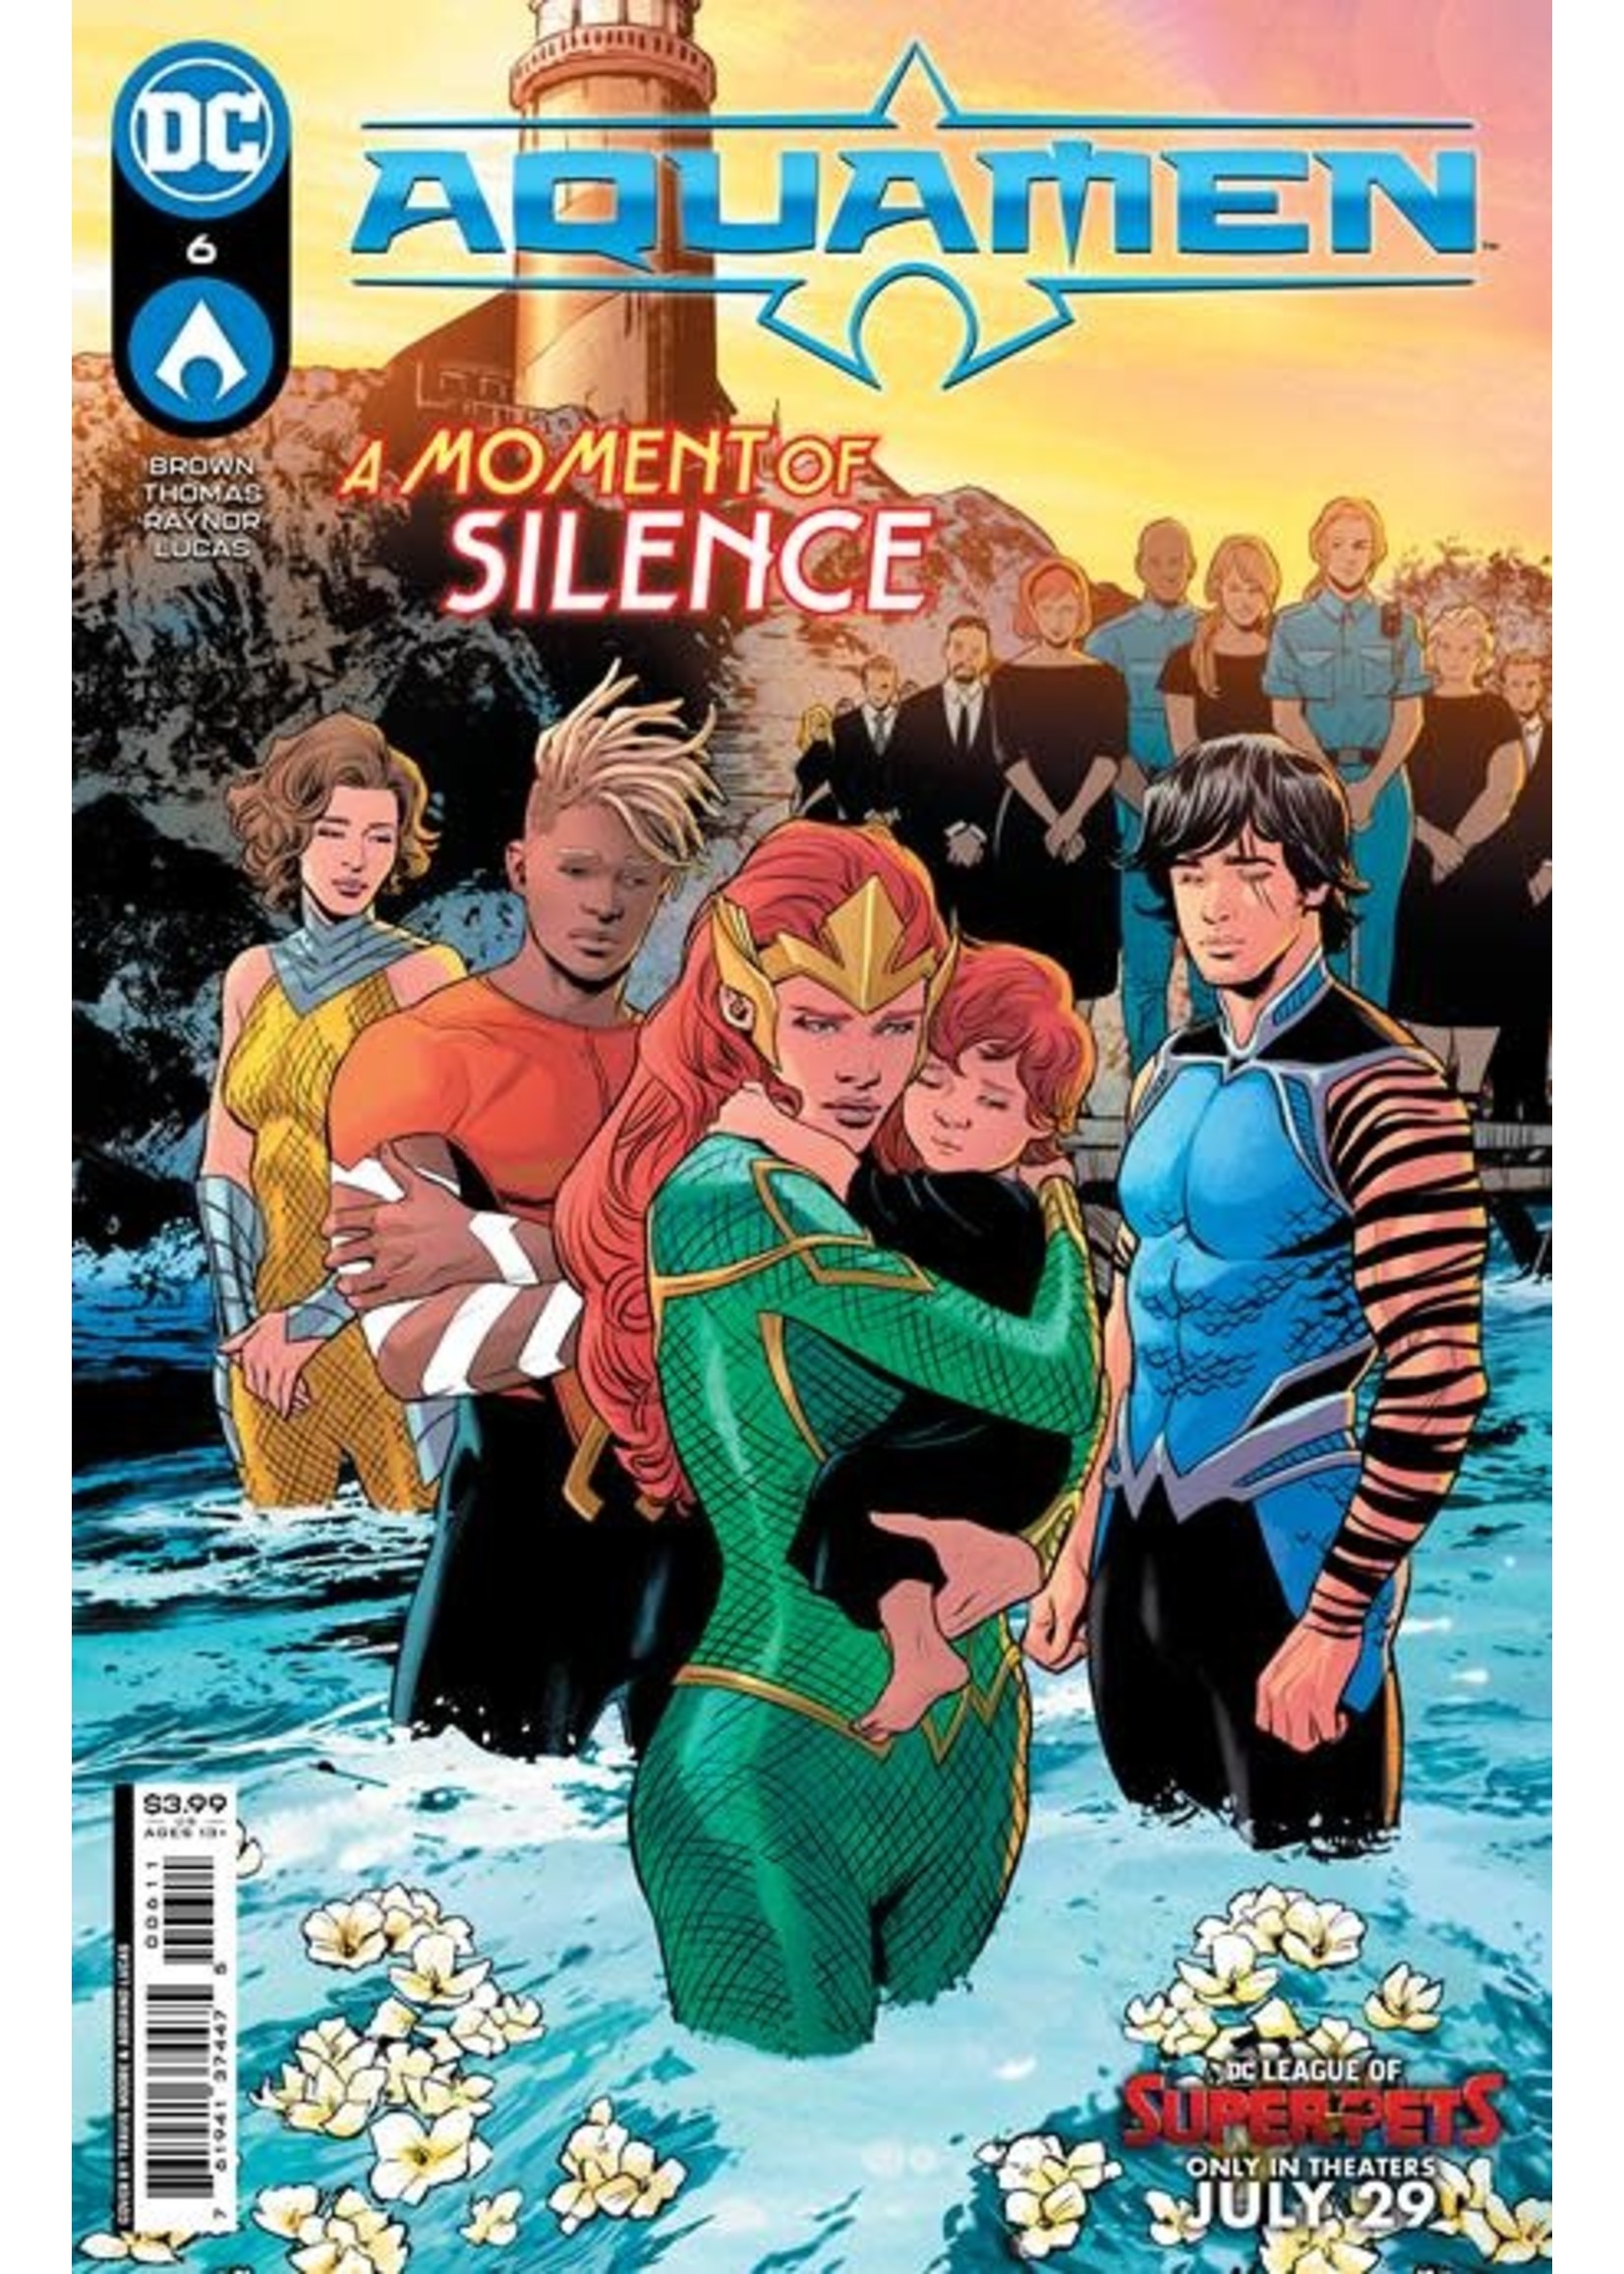 DC COMICS AQUAMEN complete 6 issue series